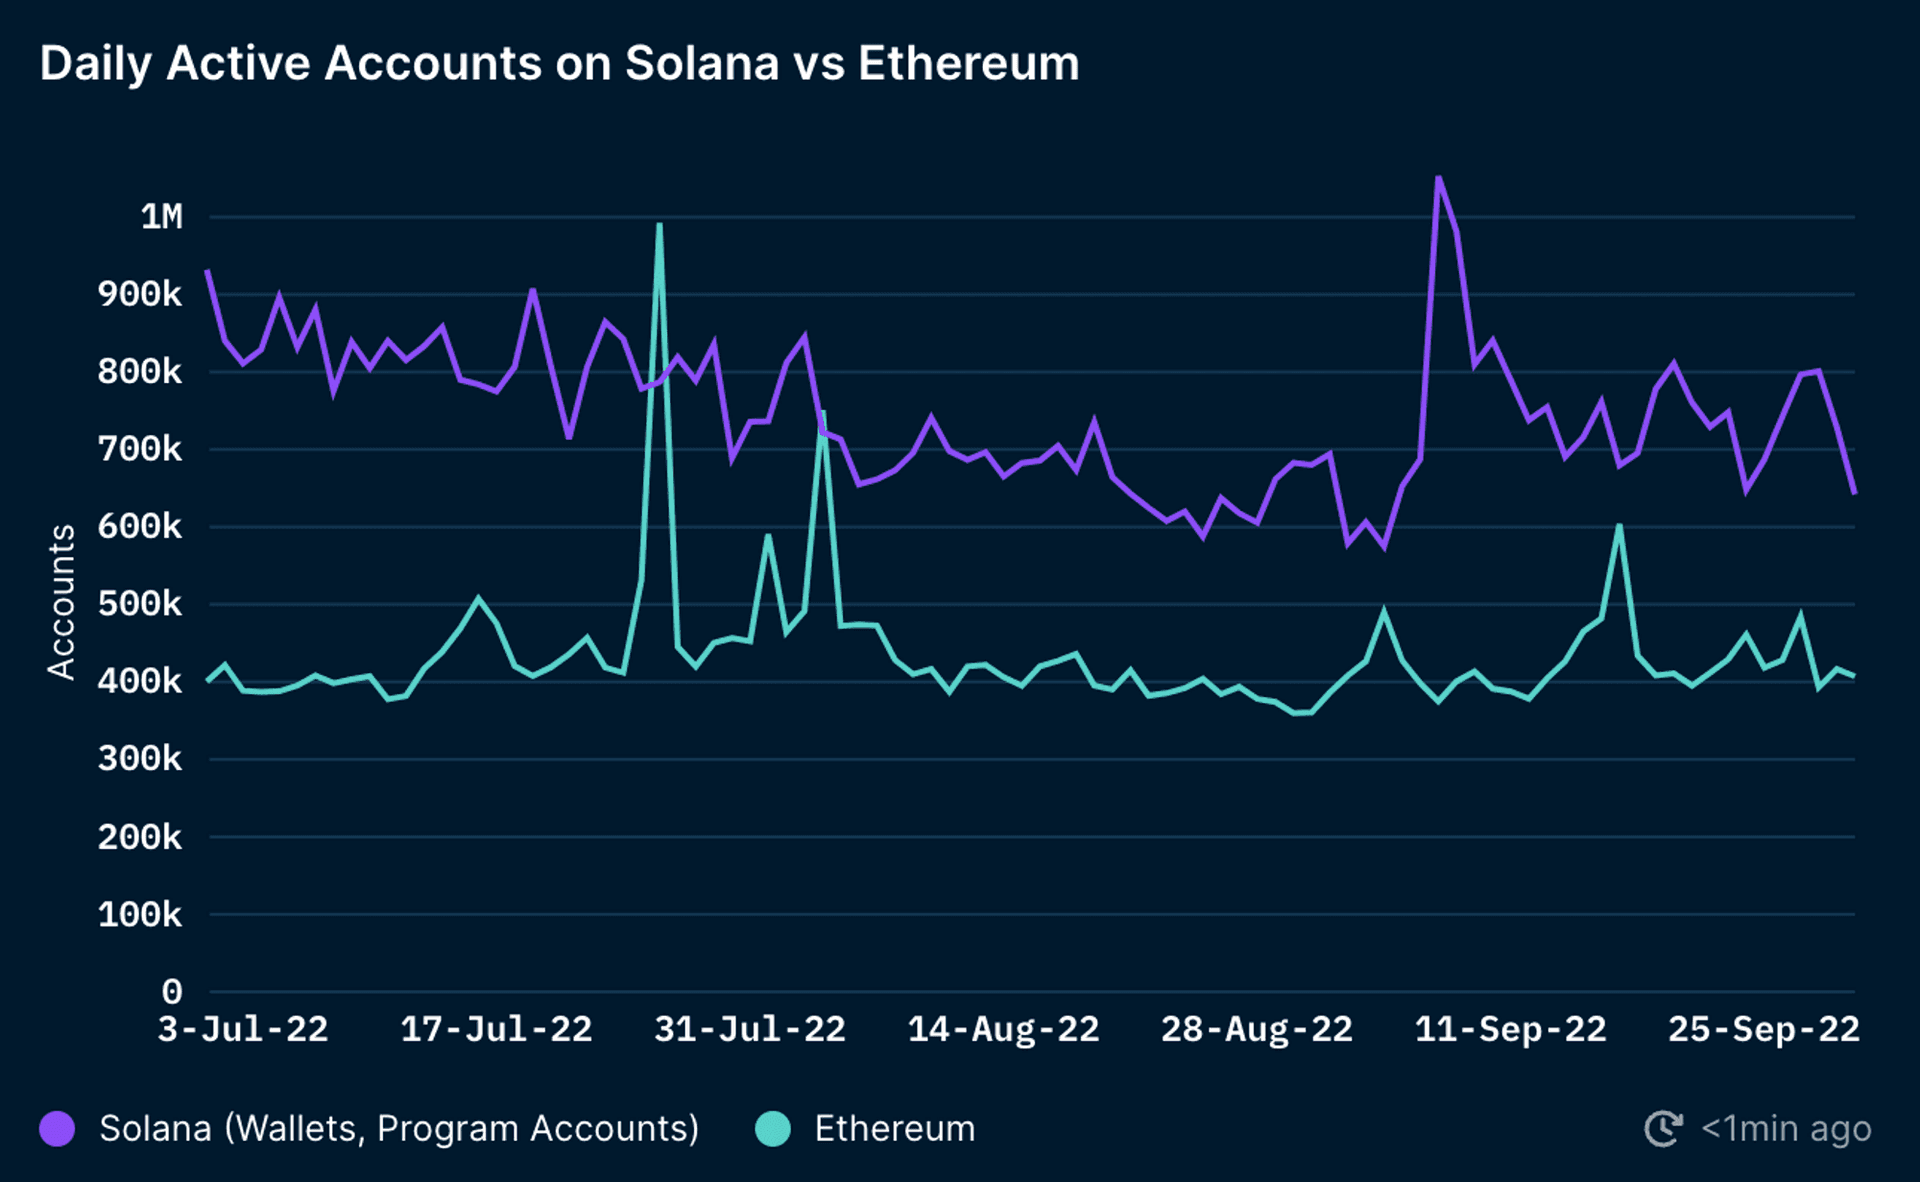 Daily Active Accounts on Ethereum vs Solana